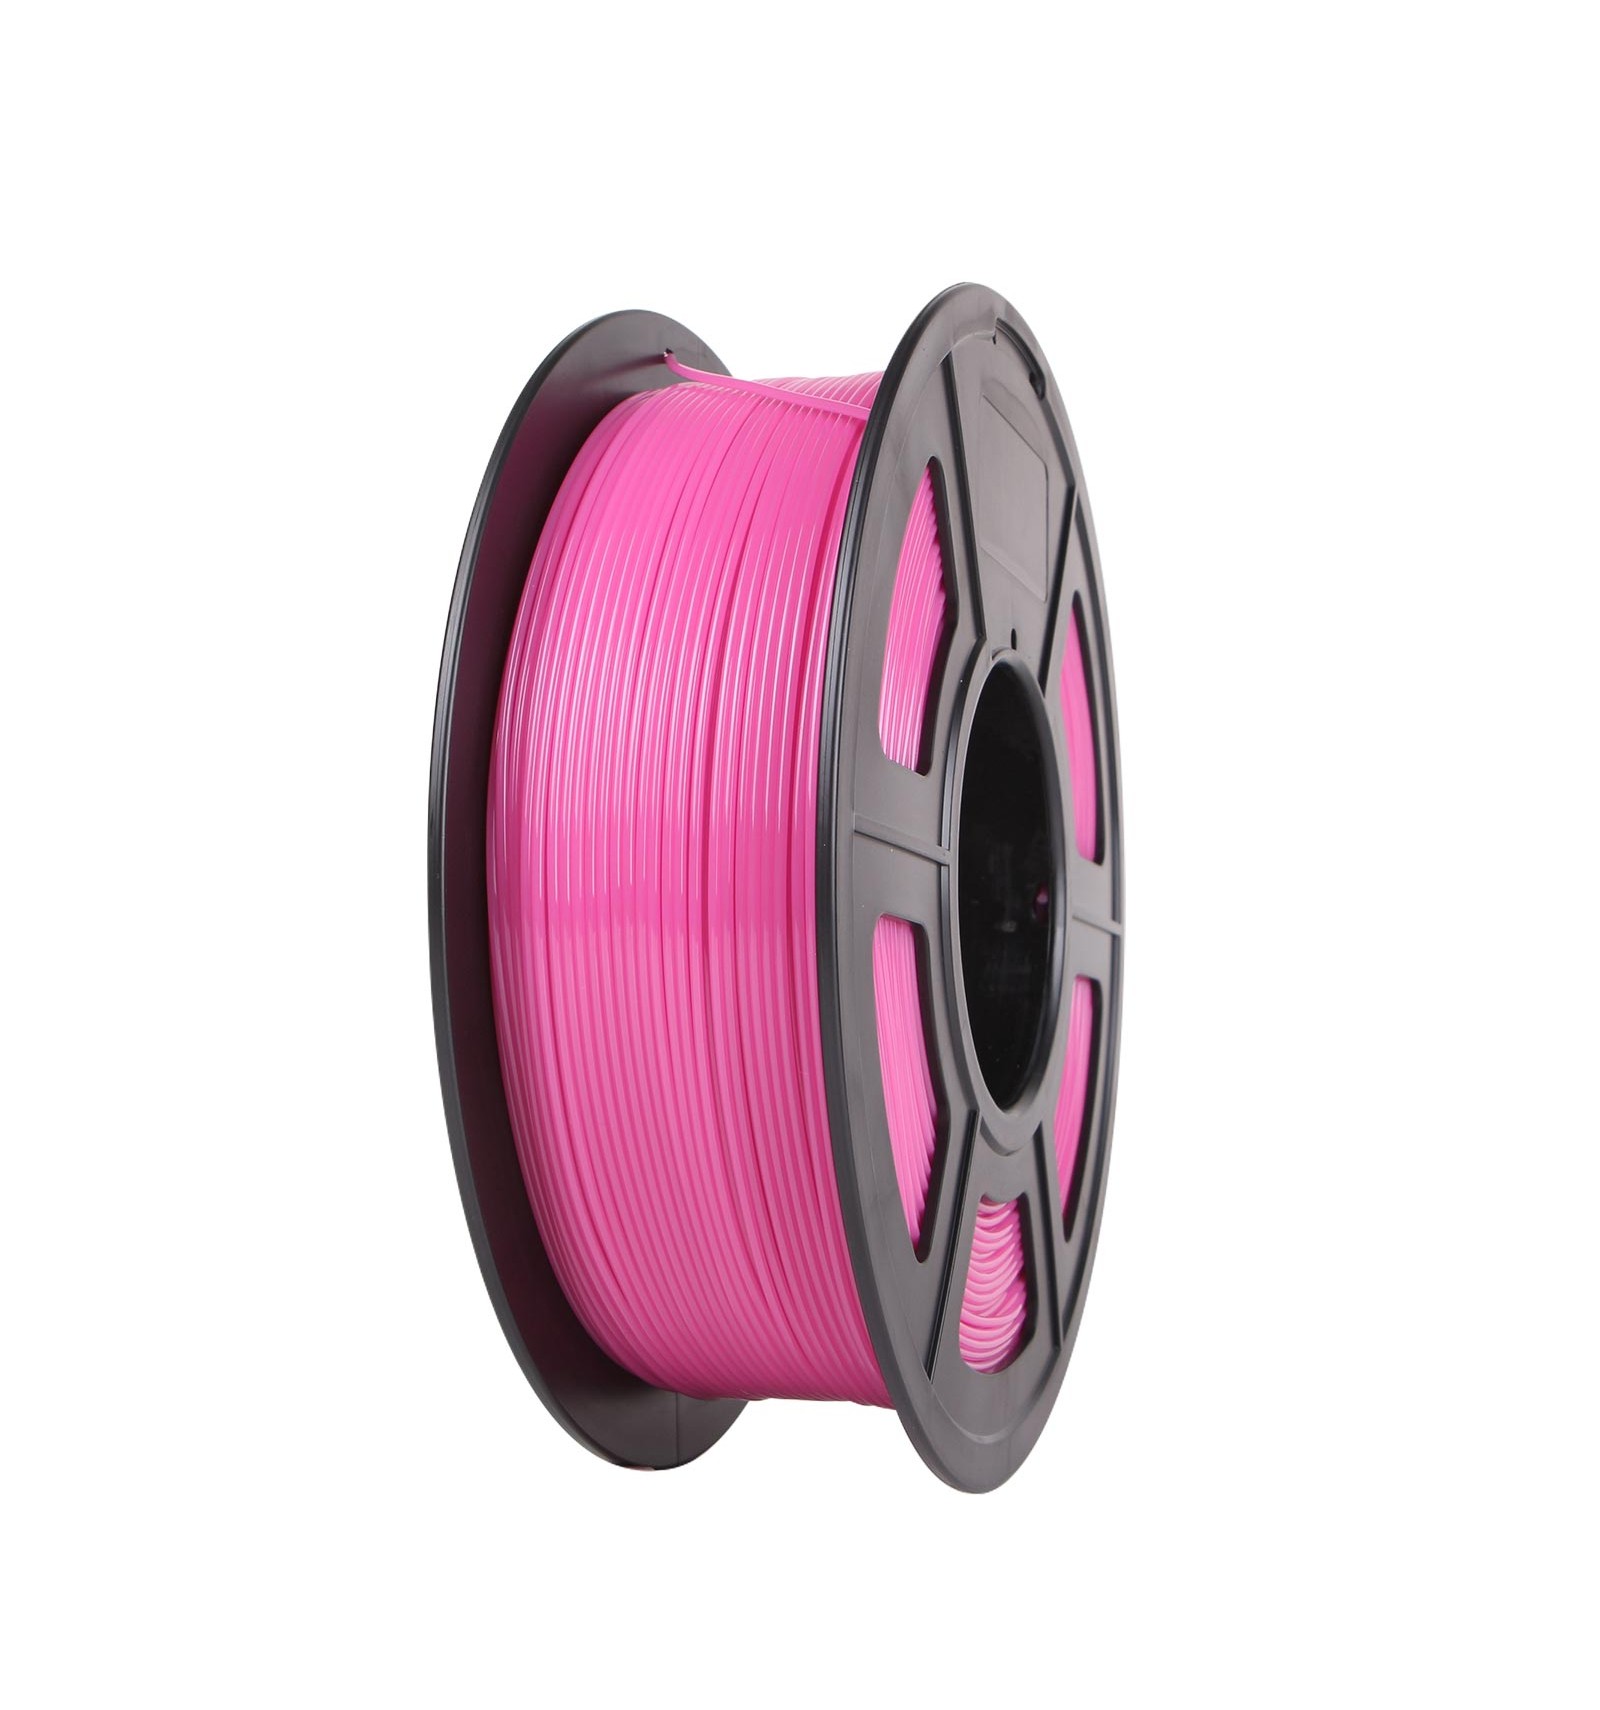 eSun Twinkling Pink PLA 1.75mm Filament 1kg – Ecovate 3D